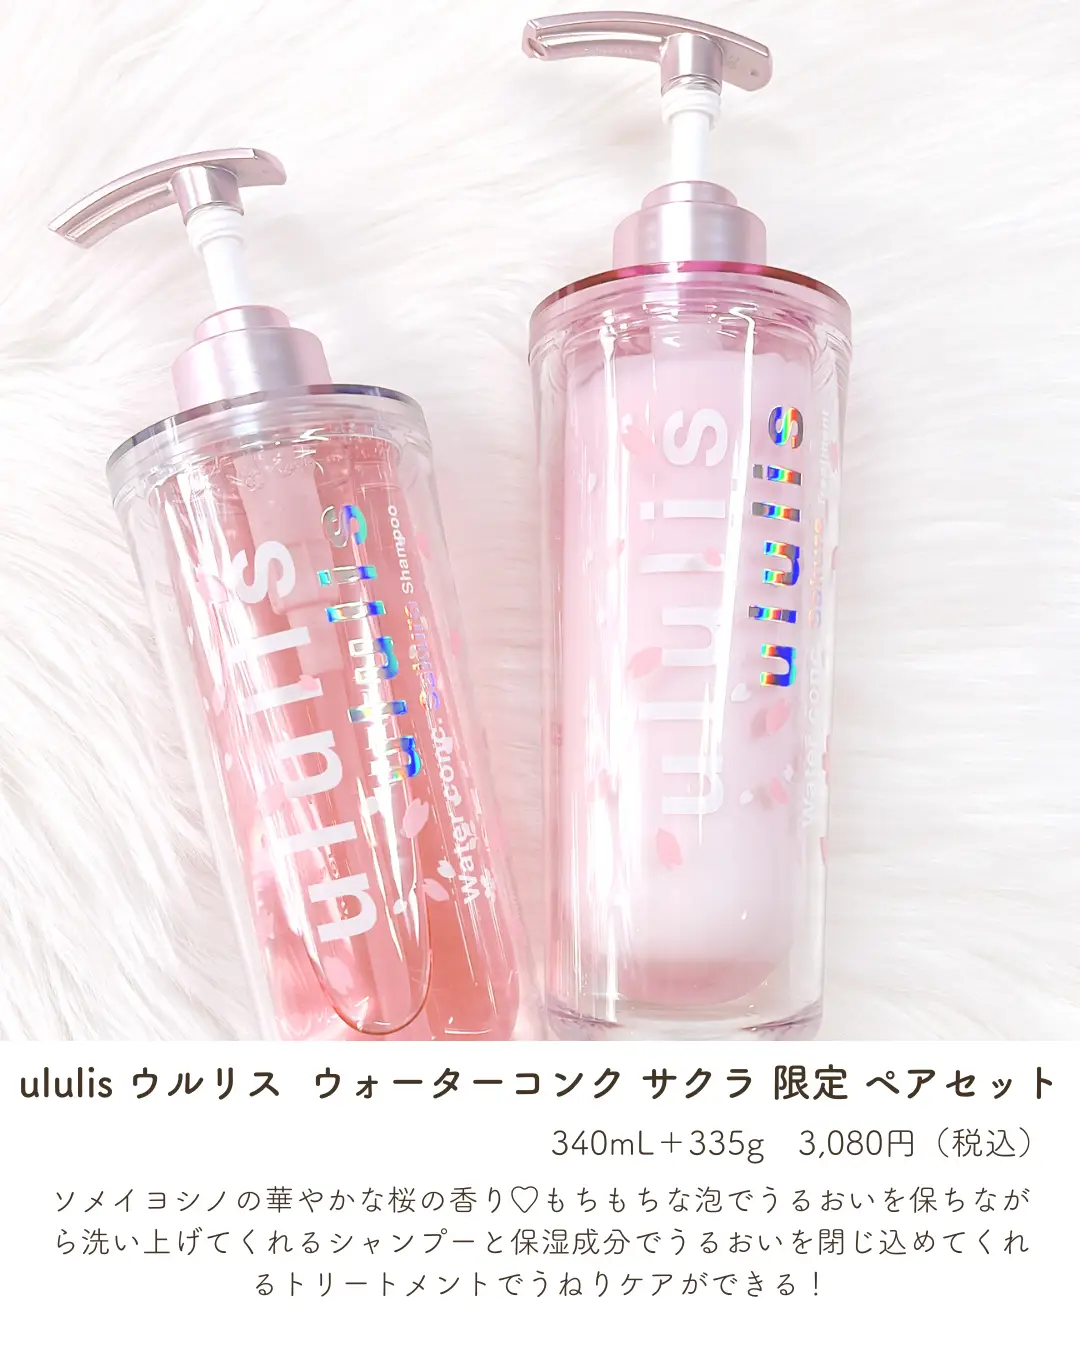  Sakura Japanese Shampoo - Routine Shampoo and